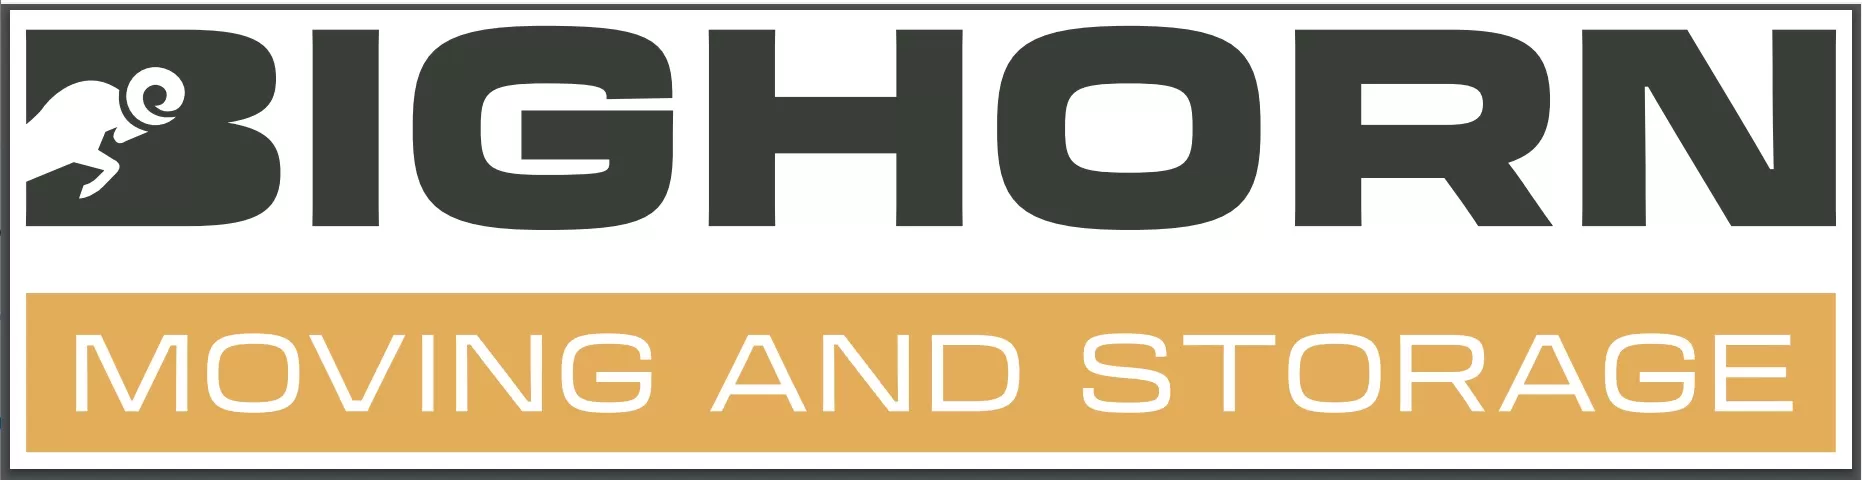 Bighorn moving and storage logo